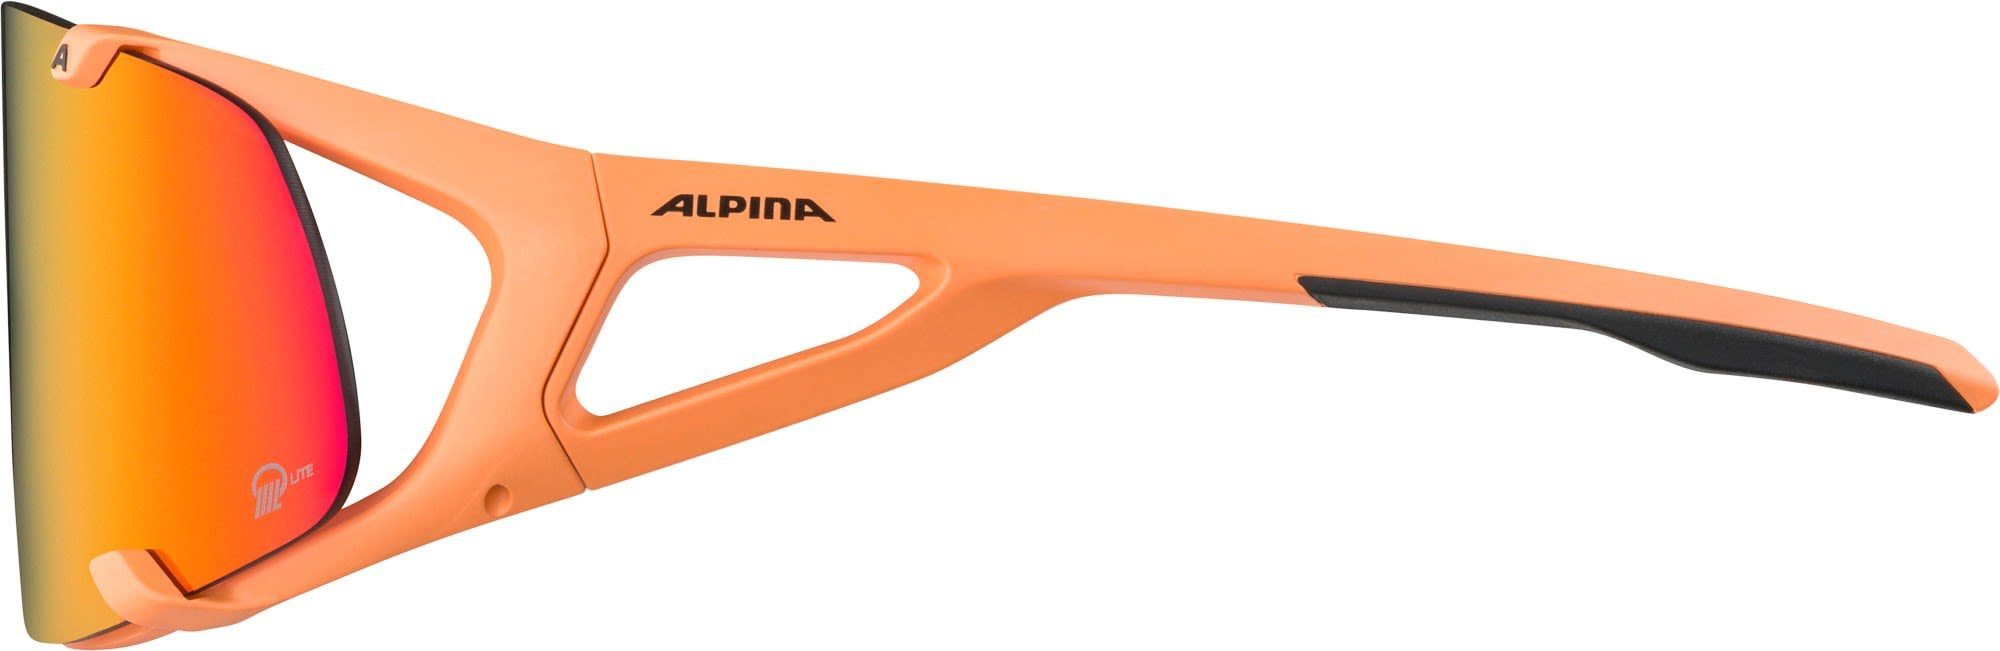 Alpina - Hawkeye Accessoires Mirror Pink S Alpina Sportbrille Sports Alpina Peach Matt Q-lite